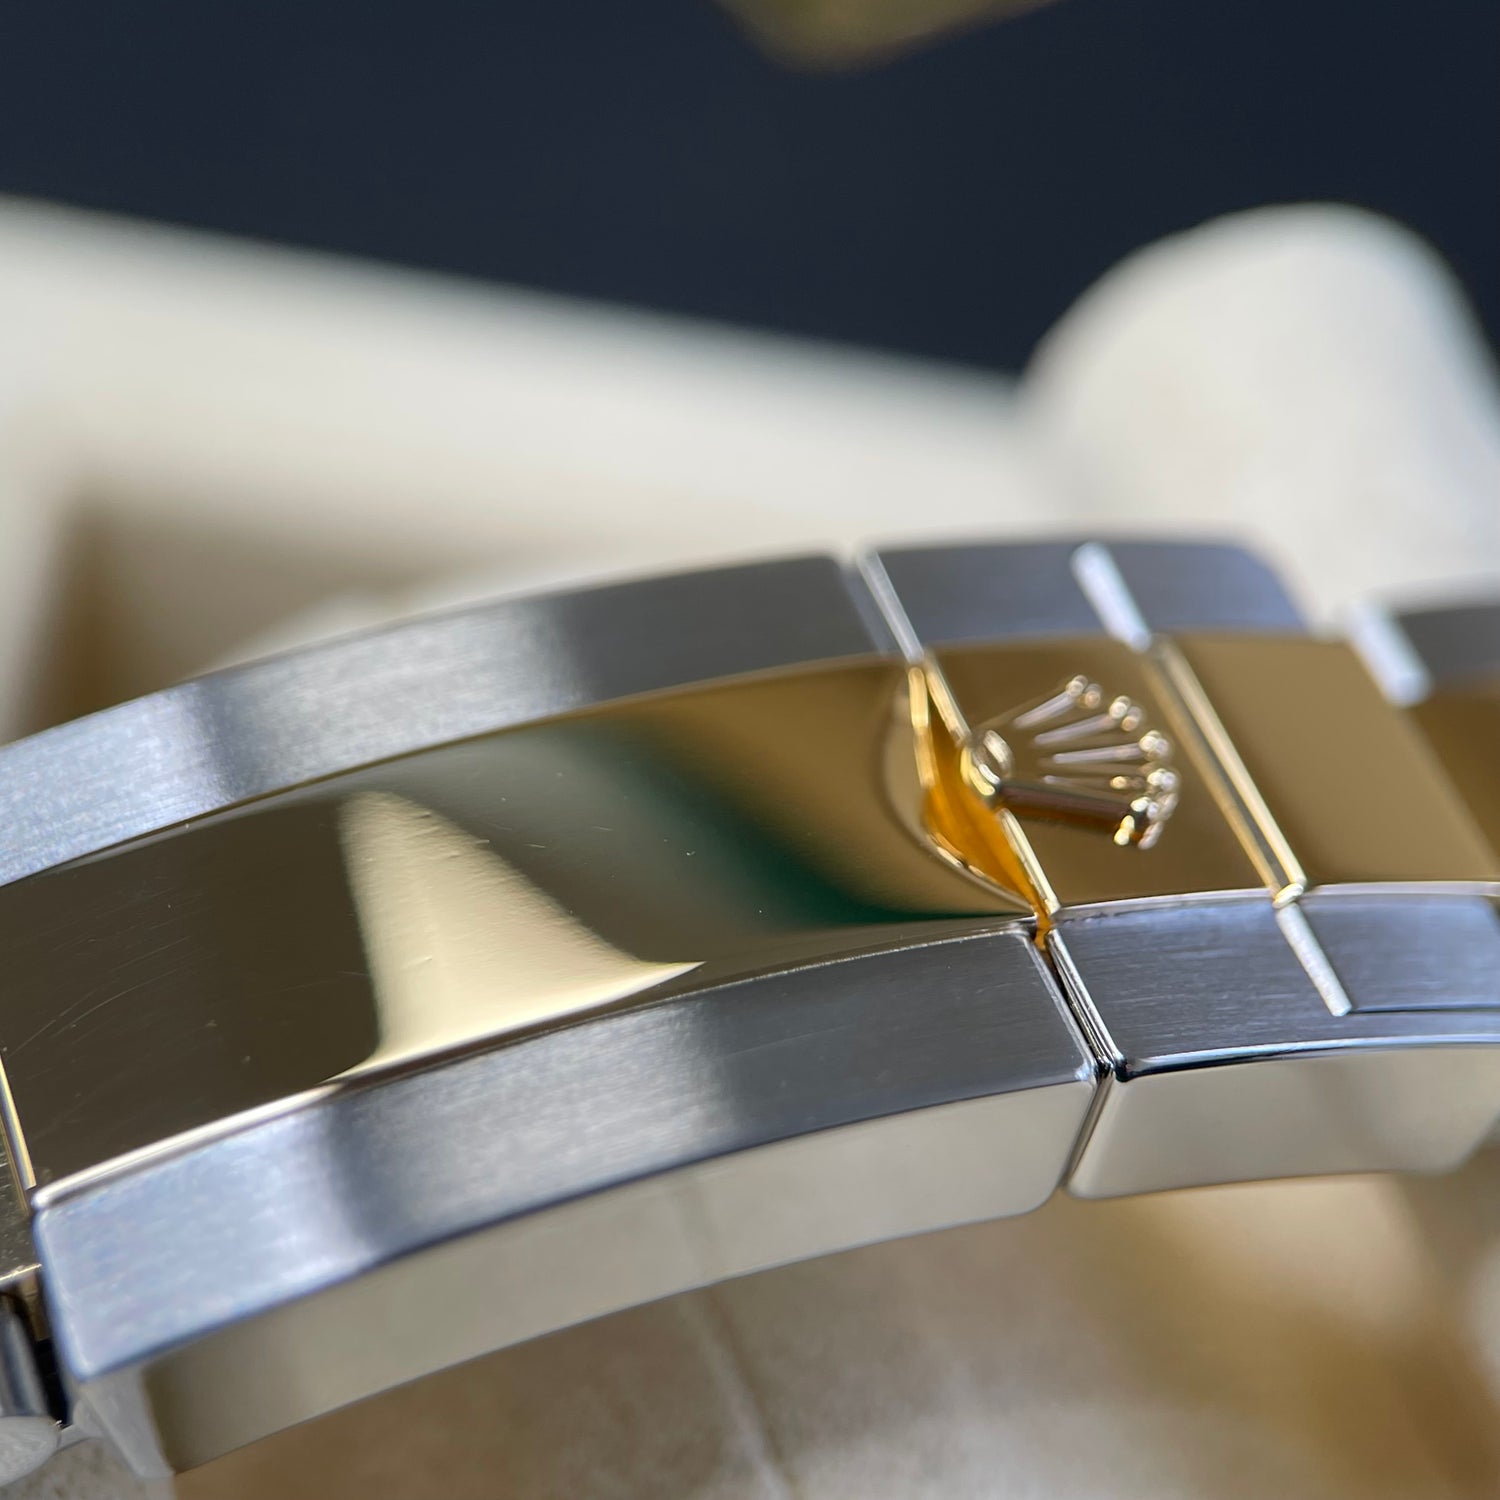 RESERVED Rolex Cosmograph Daytona Bi-Metal 116503 Black Dial 2021 Near Mint Condition Watch